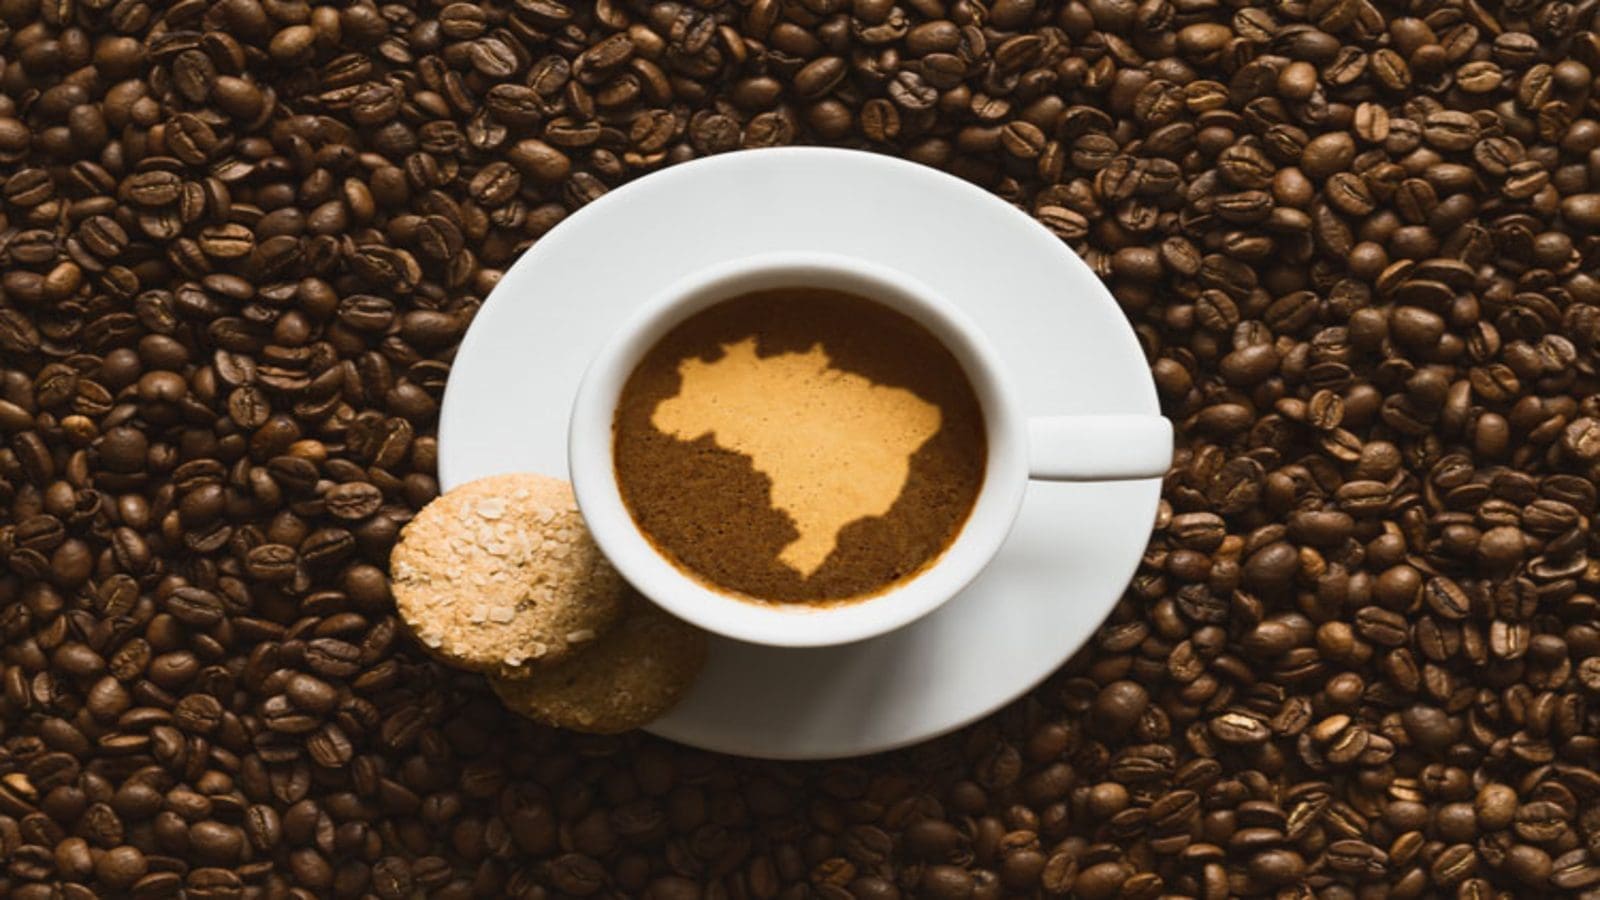 Northern Wonder develops Coffee Free Coffee to combat coffee-related deforestation